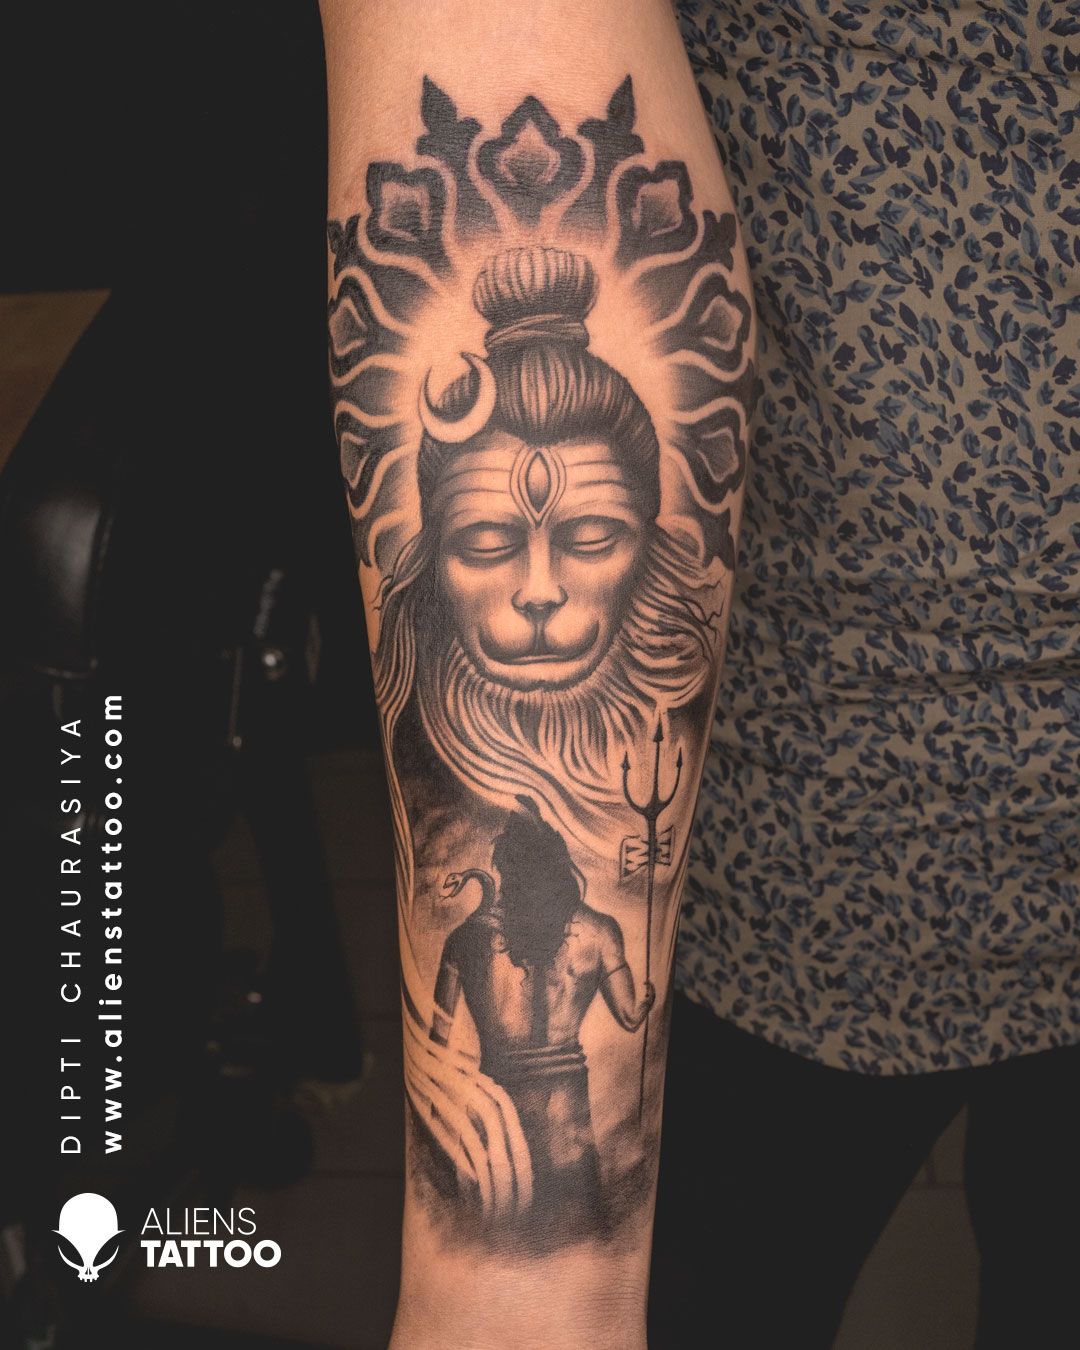 Sunny Bhanushali  Best Tattoo Artist in India  Mumbai  Alien tattoo Tattoo  artists Cool tattoos